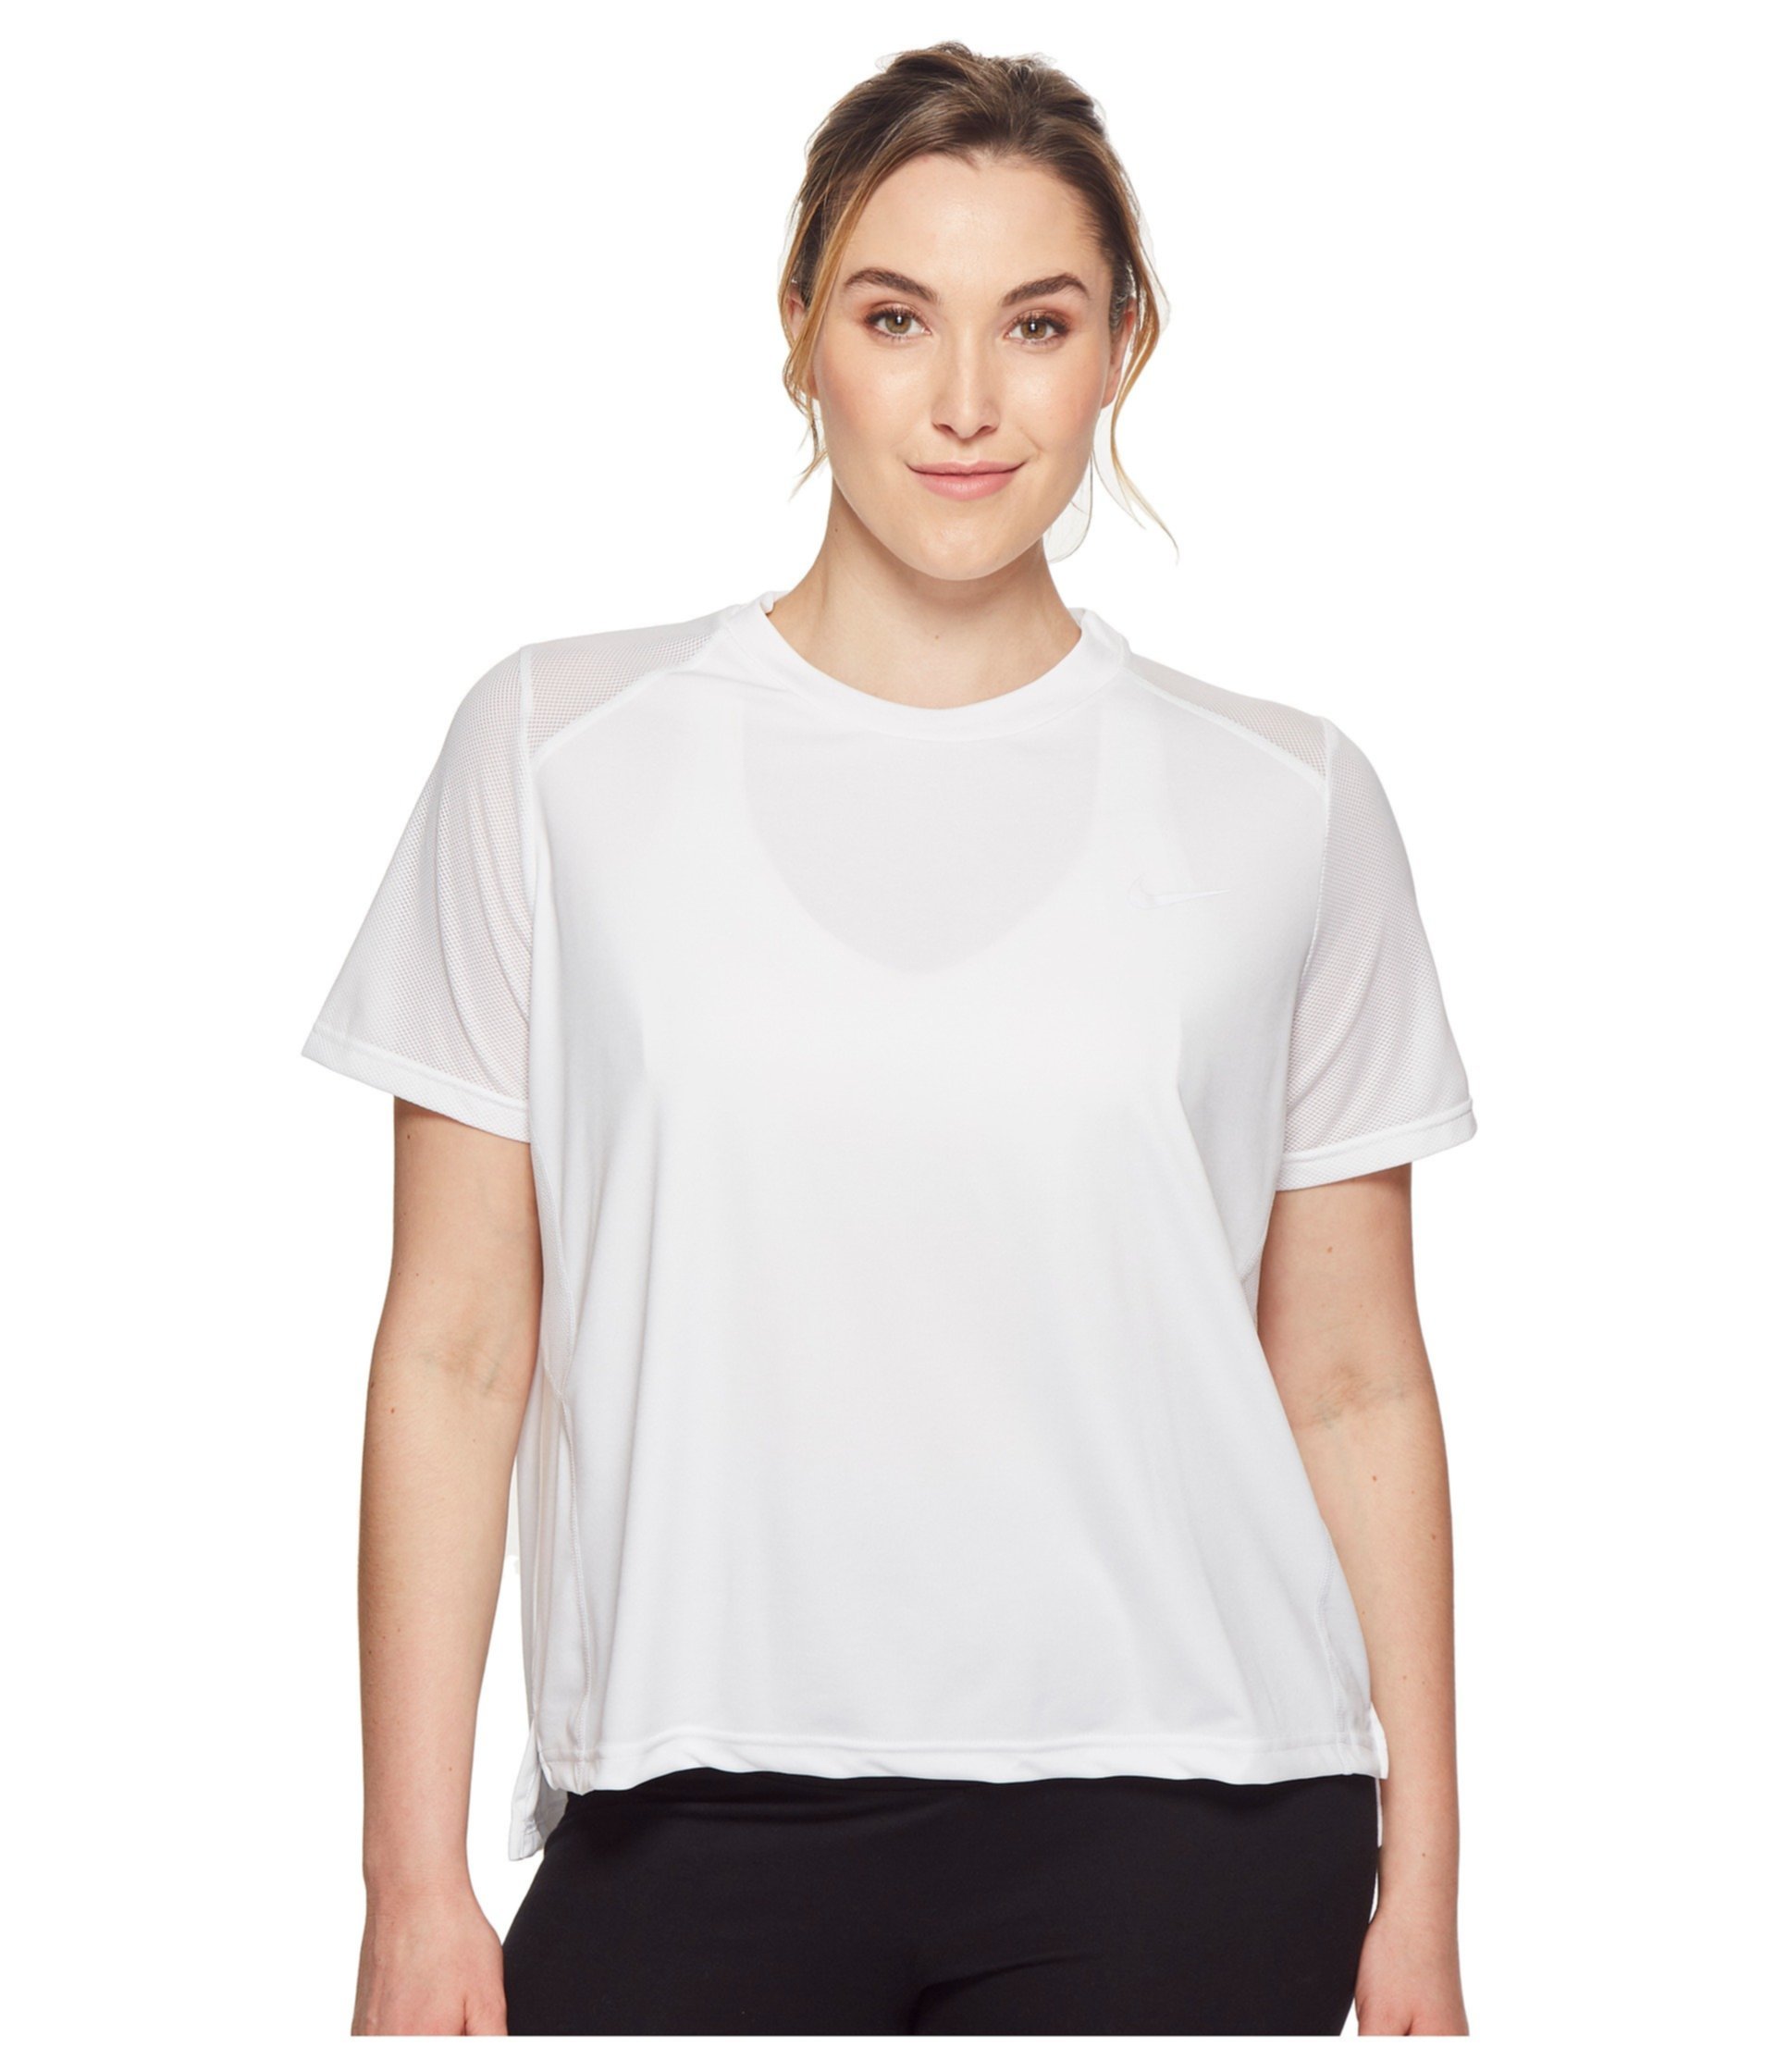 Беговая футболка с коротким рукавом Dry Miler (размеры 1X-3X) Nike